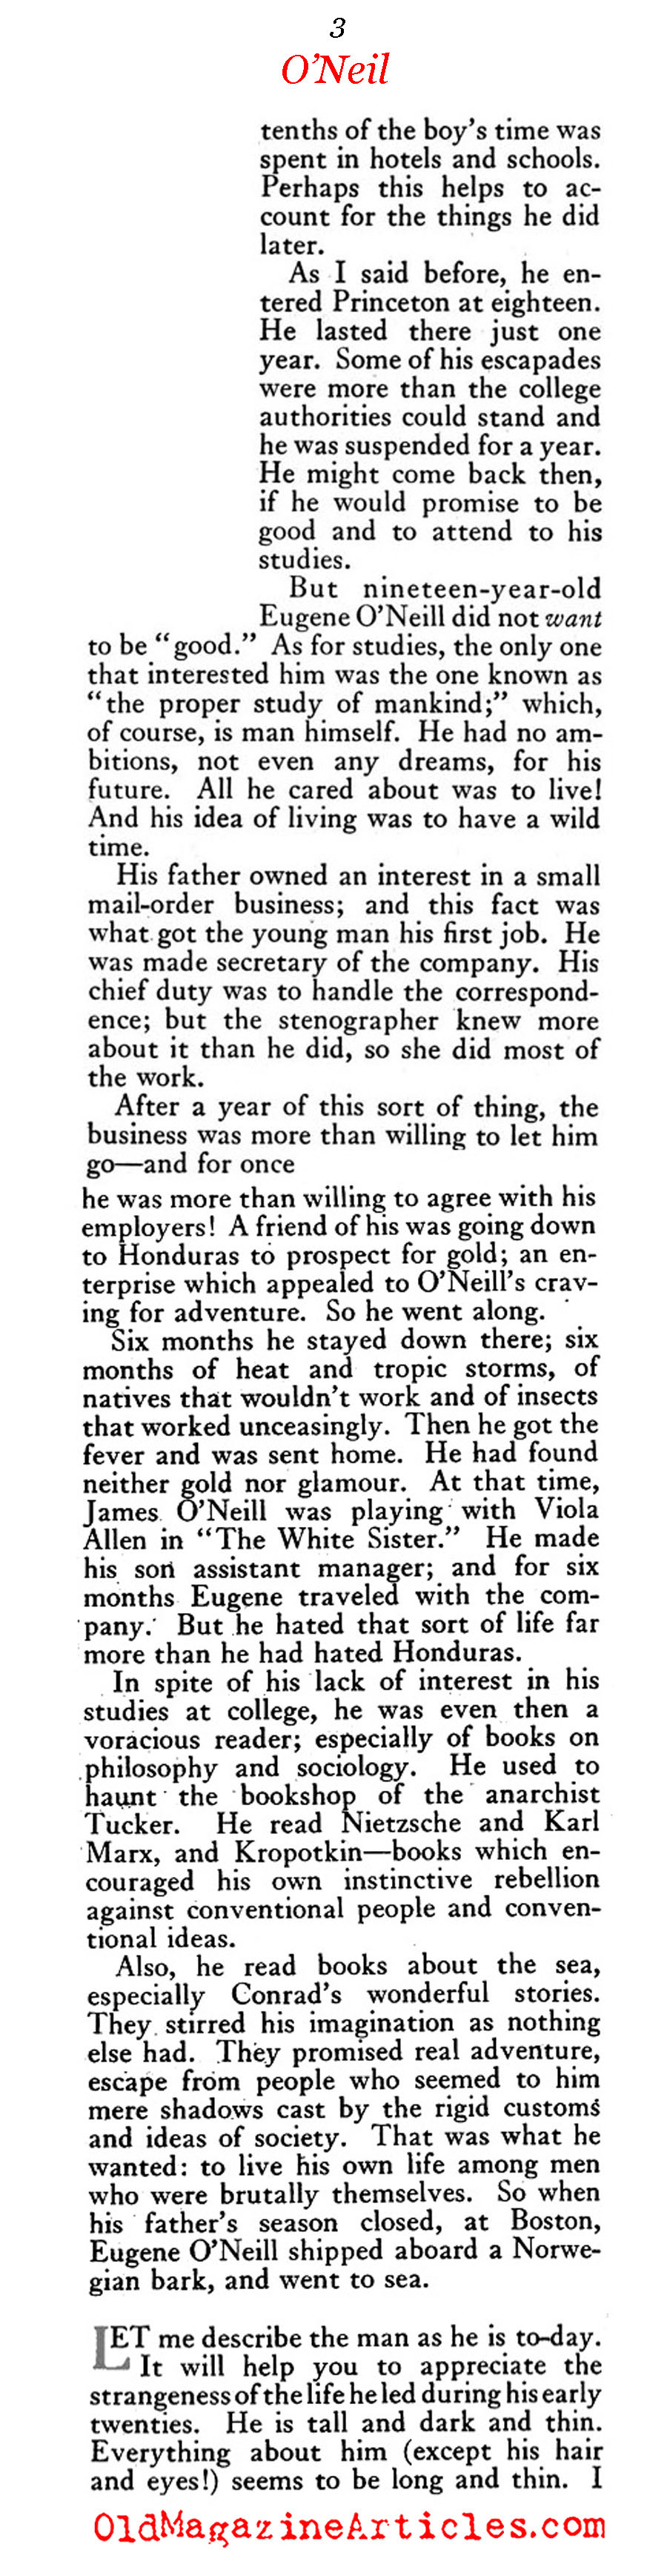 The Extraordinary Story of Eugene O'Neill (The American Magazine, 1922)